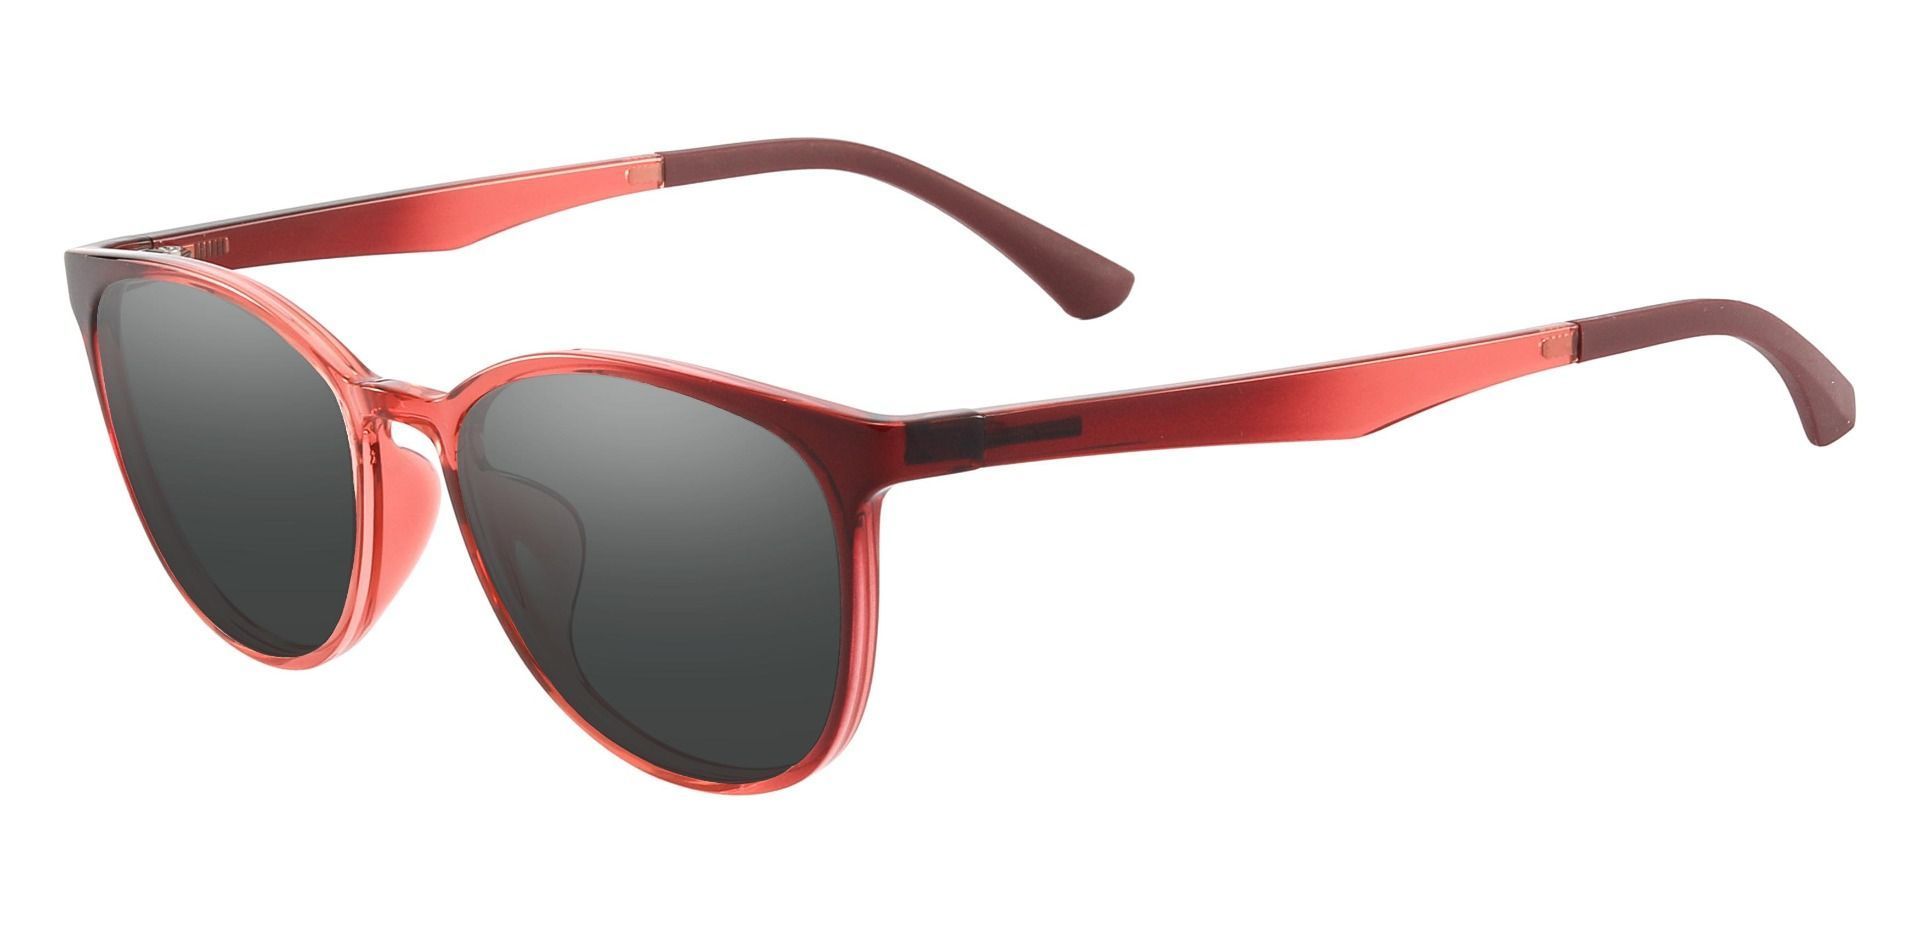 Pembroke Oval Prescription Sunglasses - Pink Frame With Gray Lenses